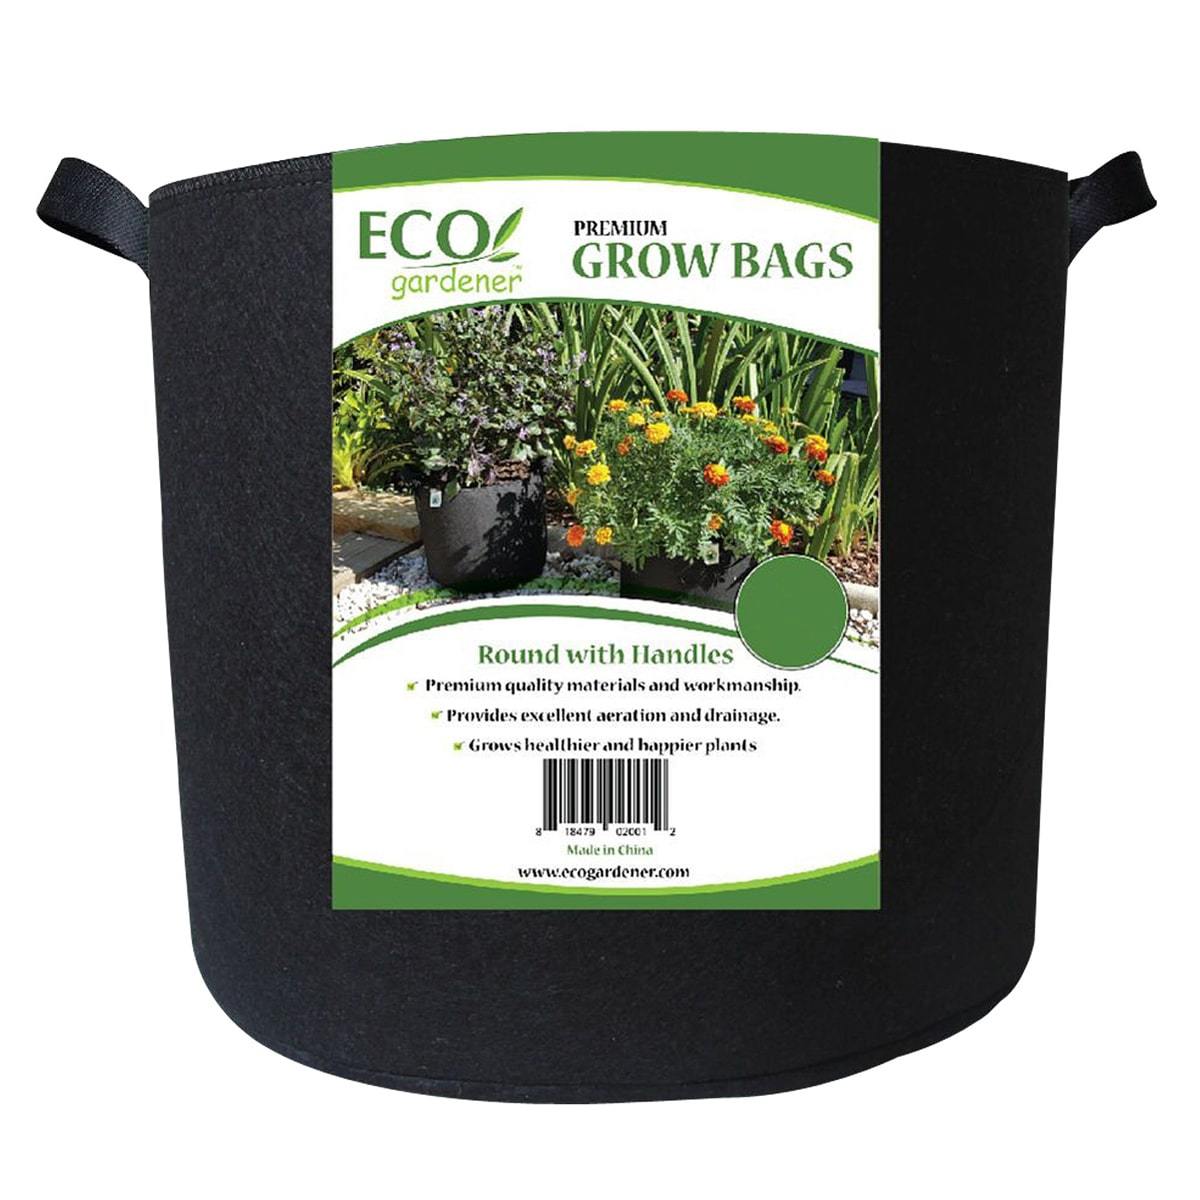 Ecogardener round grow bags with handle